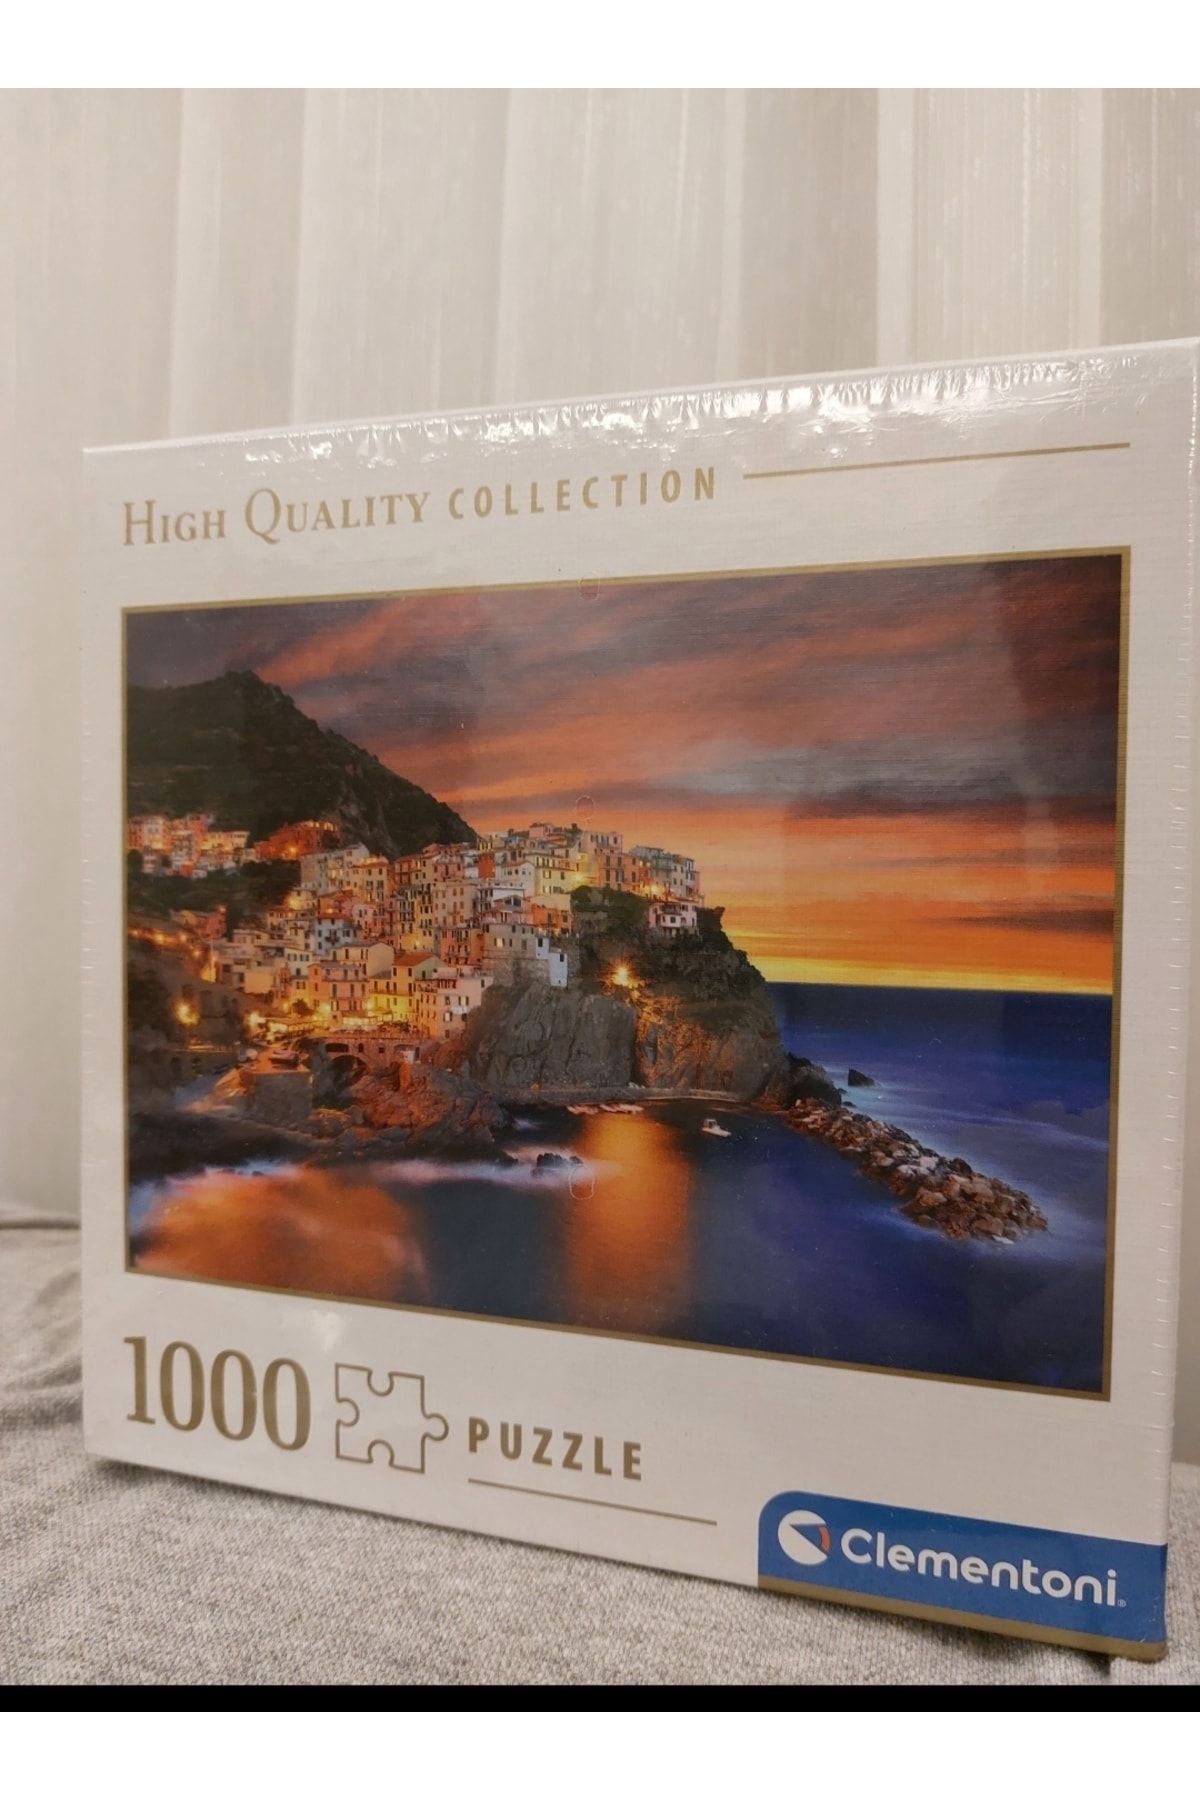 Clementoni - 1000 Parça High Quality Collection Yetişkin Puzzle